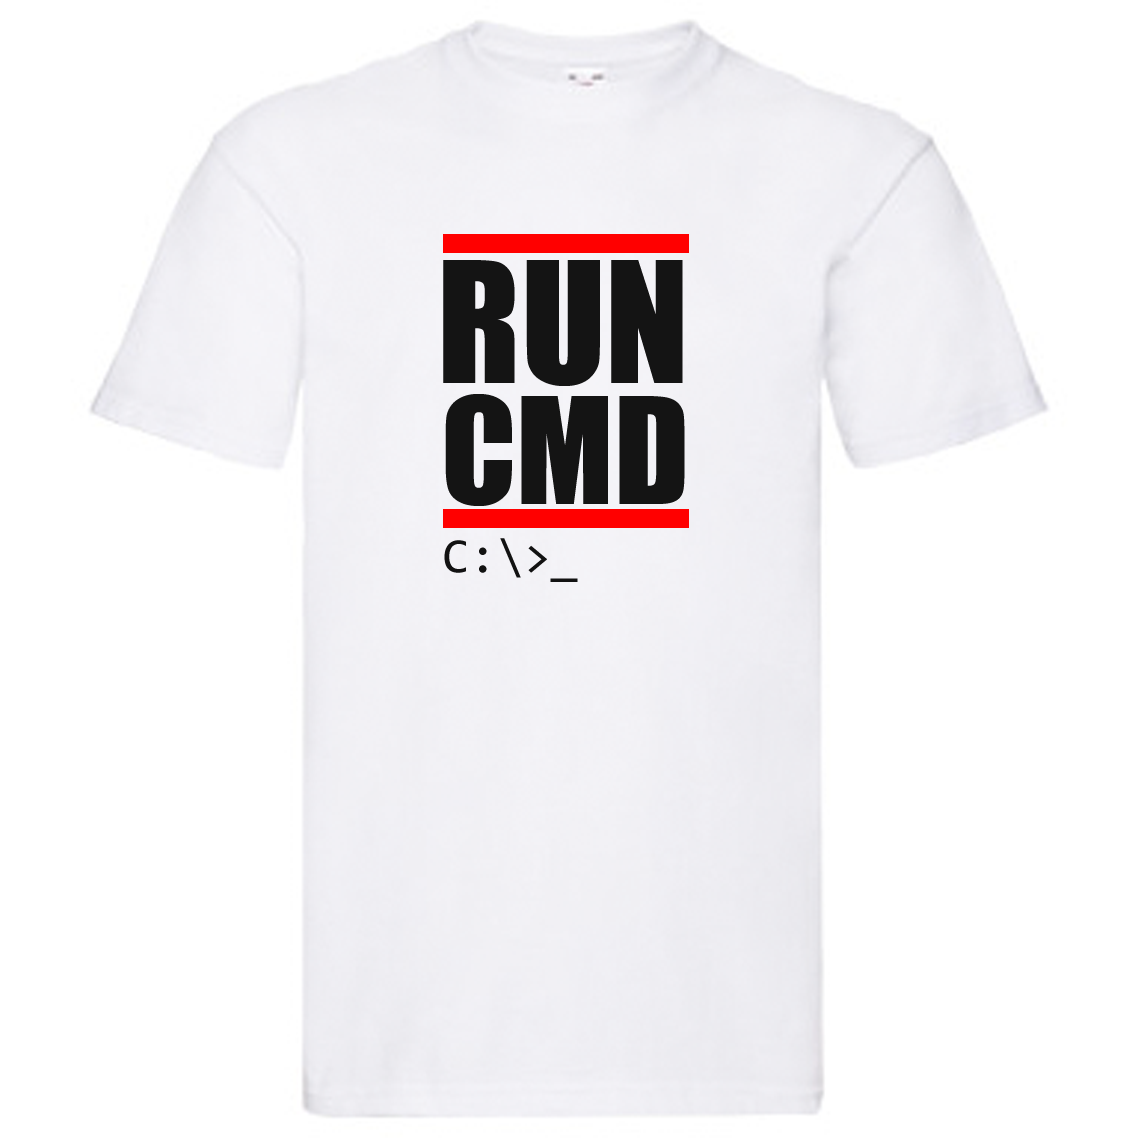 T-Shirt - RUN CMD